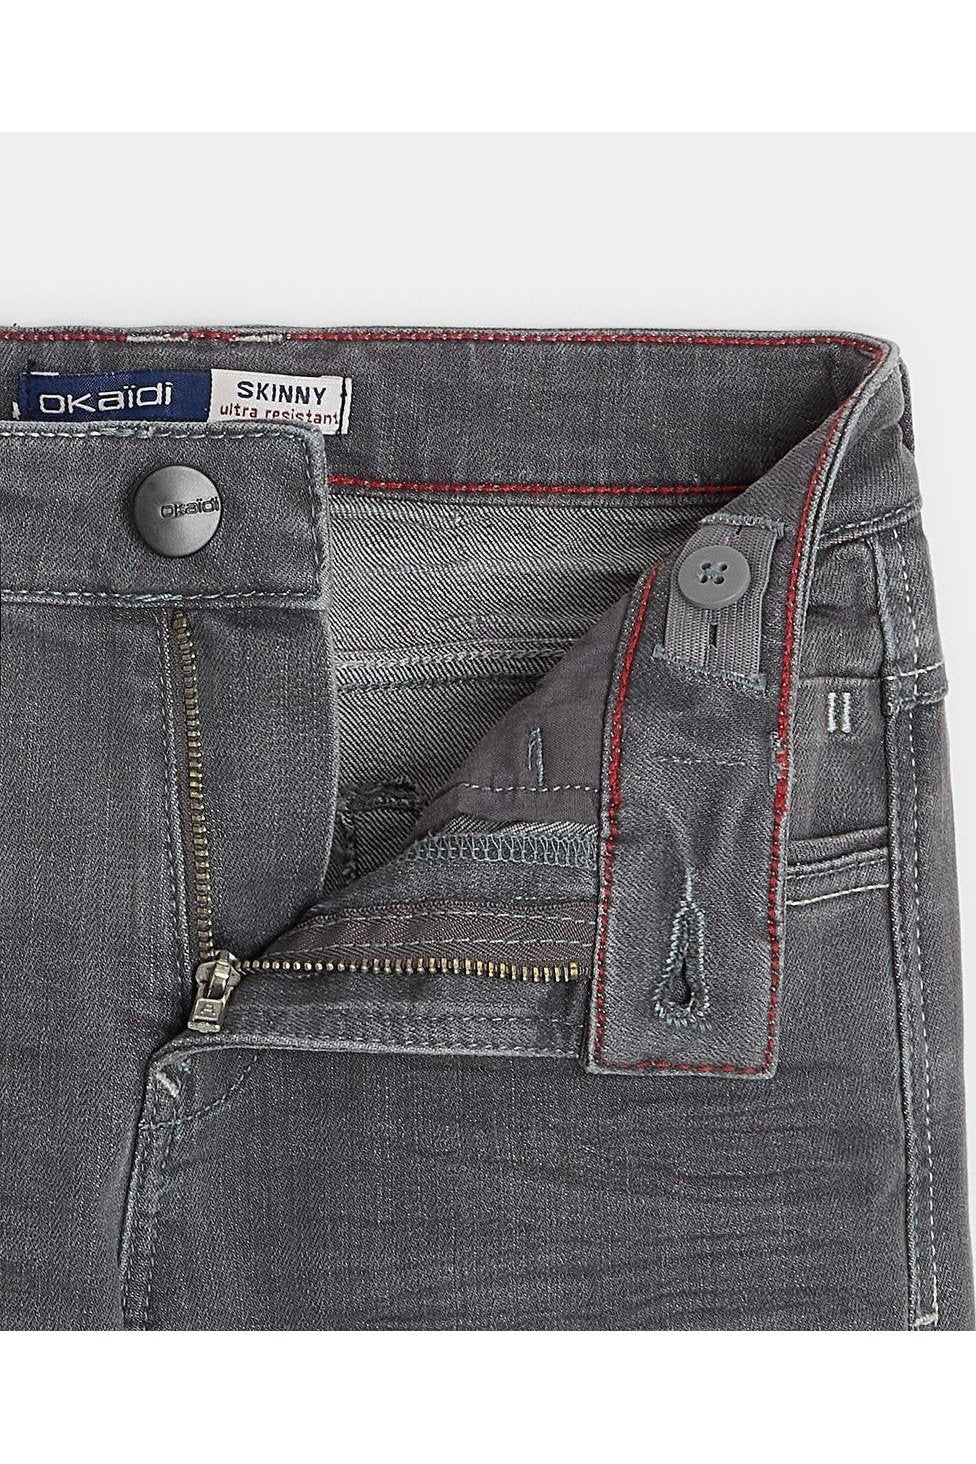 OKAIDI - ג'ינס Skinny Fit אפור ילדות - MASHBIR//365